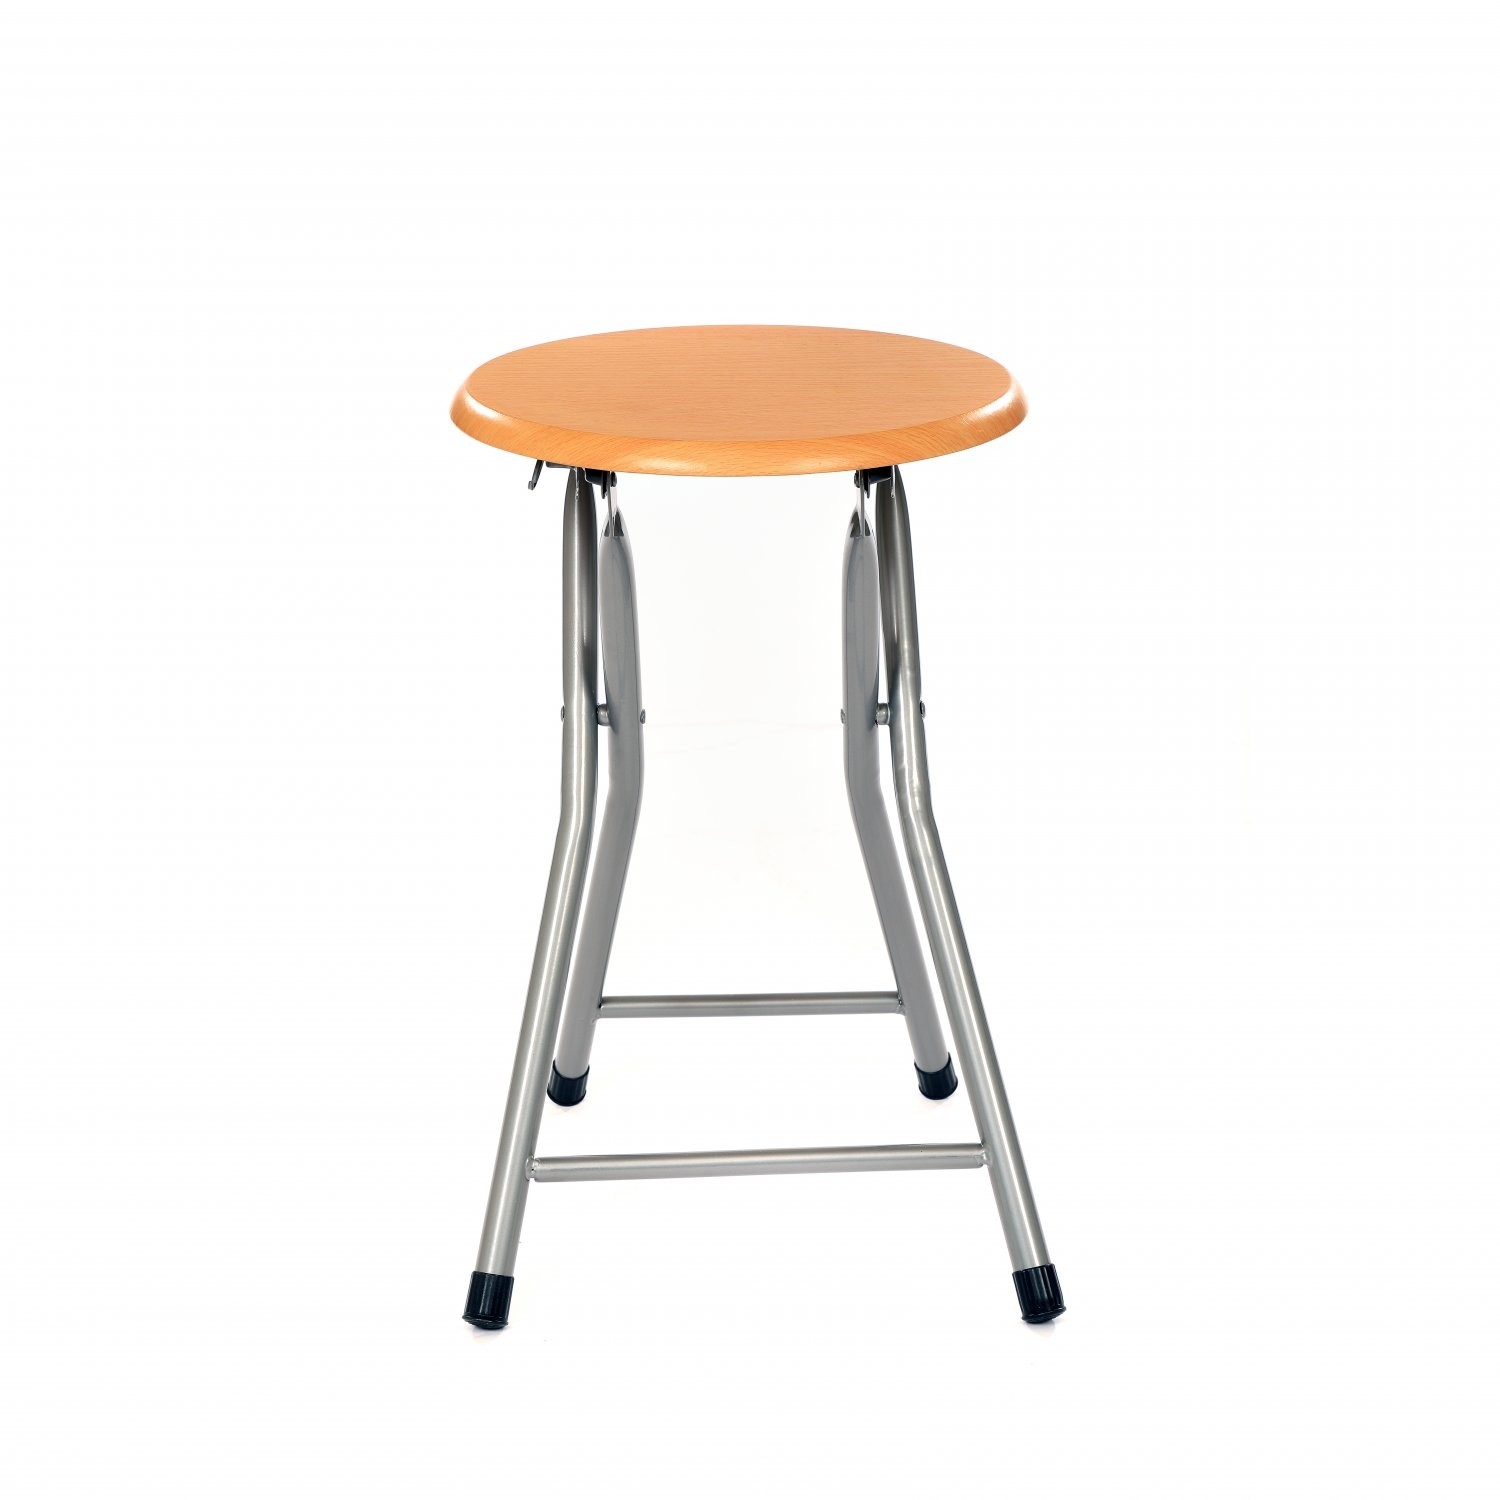 Wooden folding breakfast kitchen bar stool seat gbp10 99 5